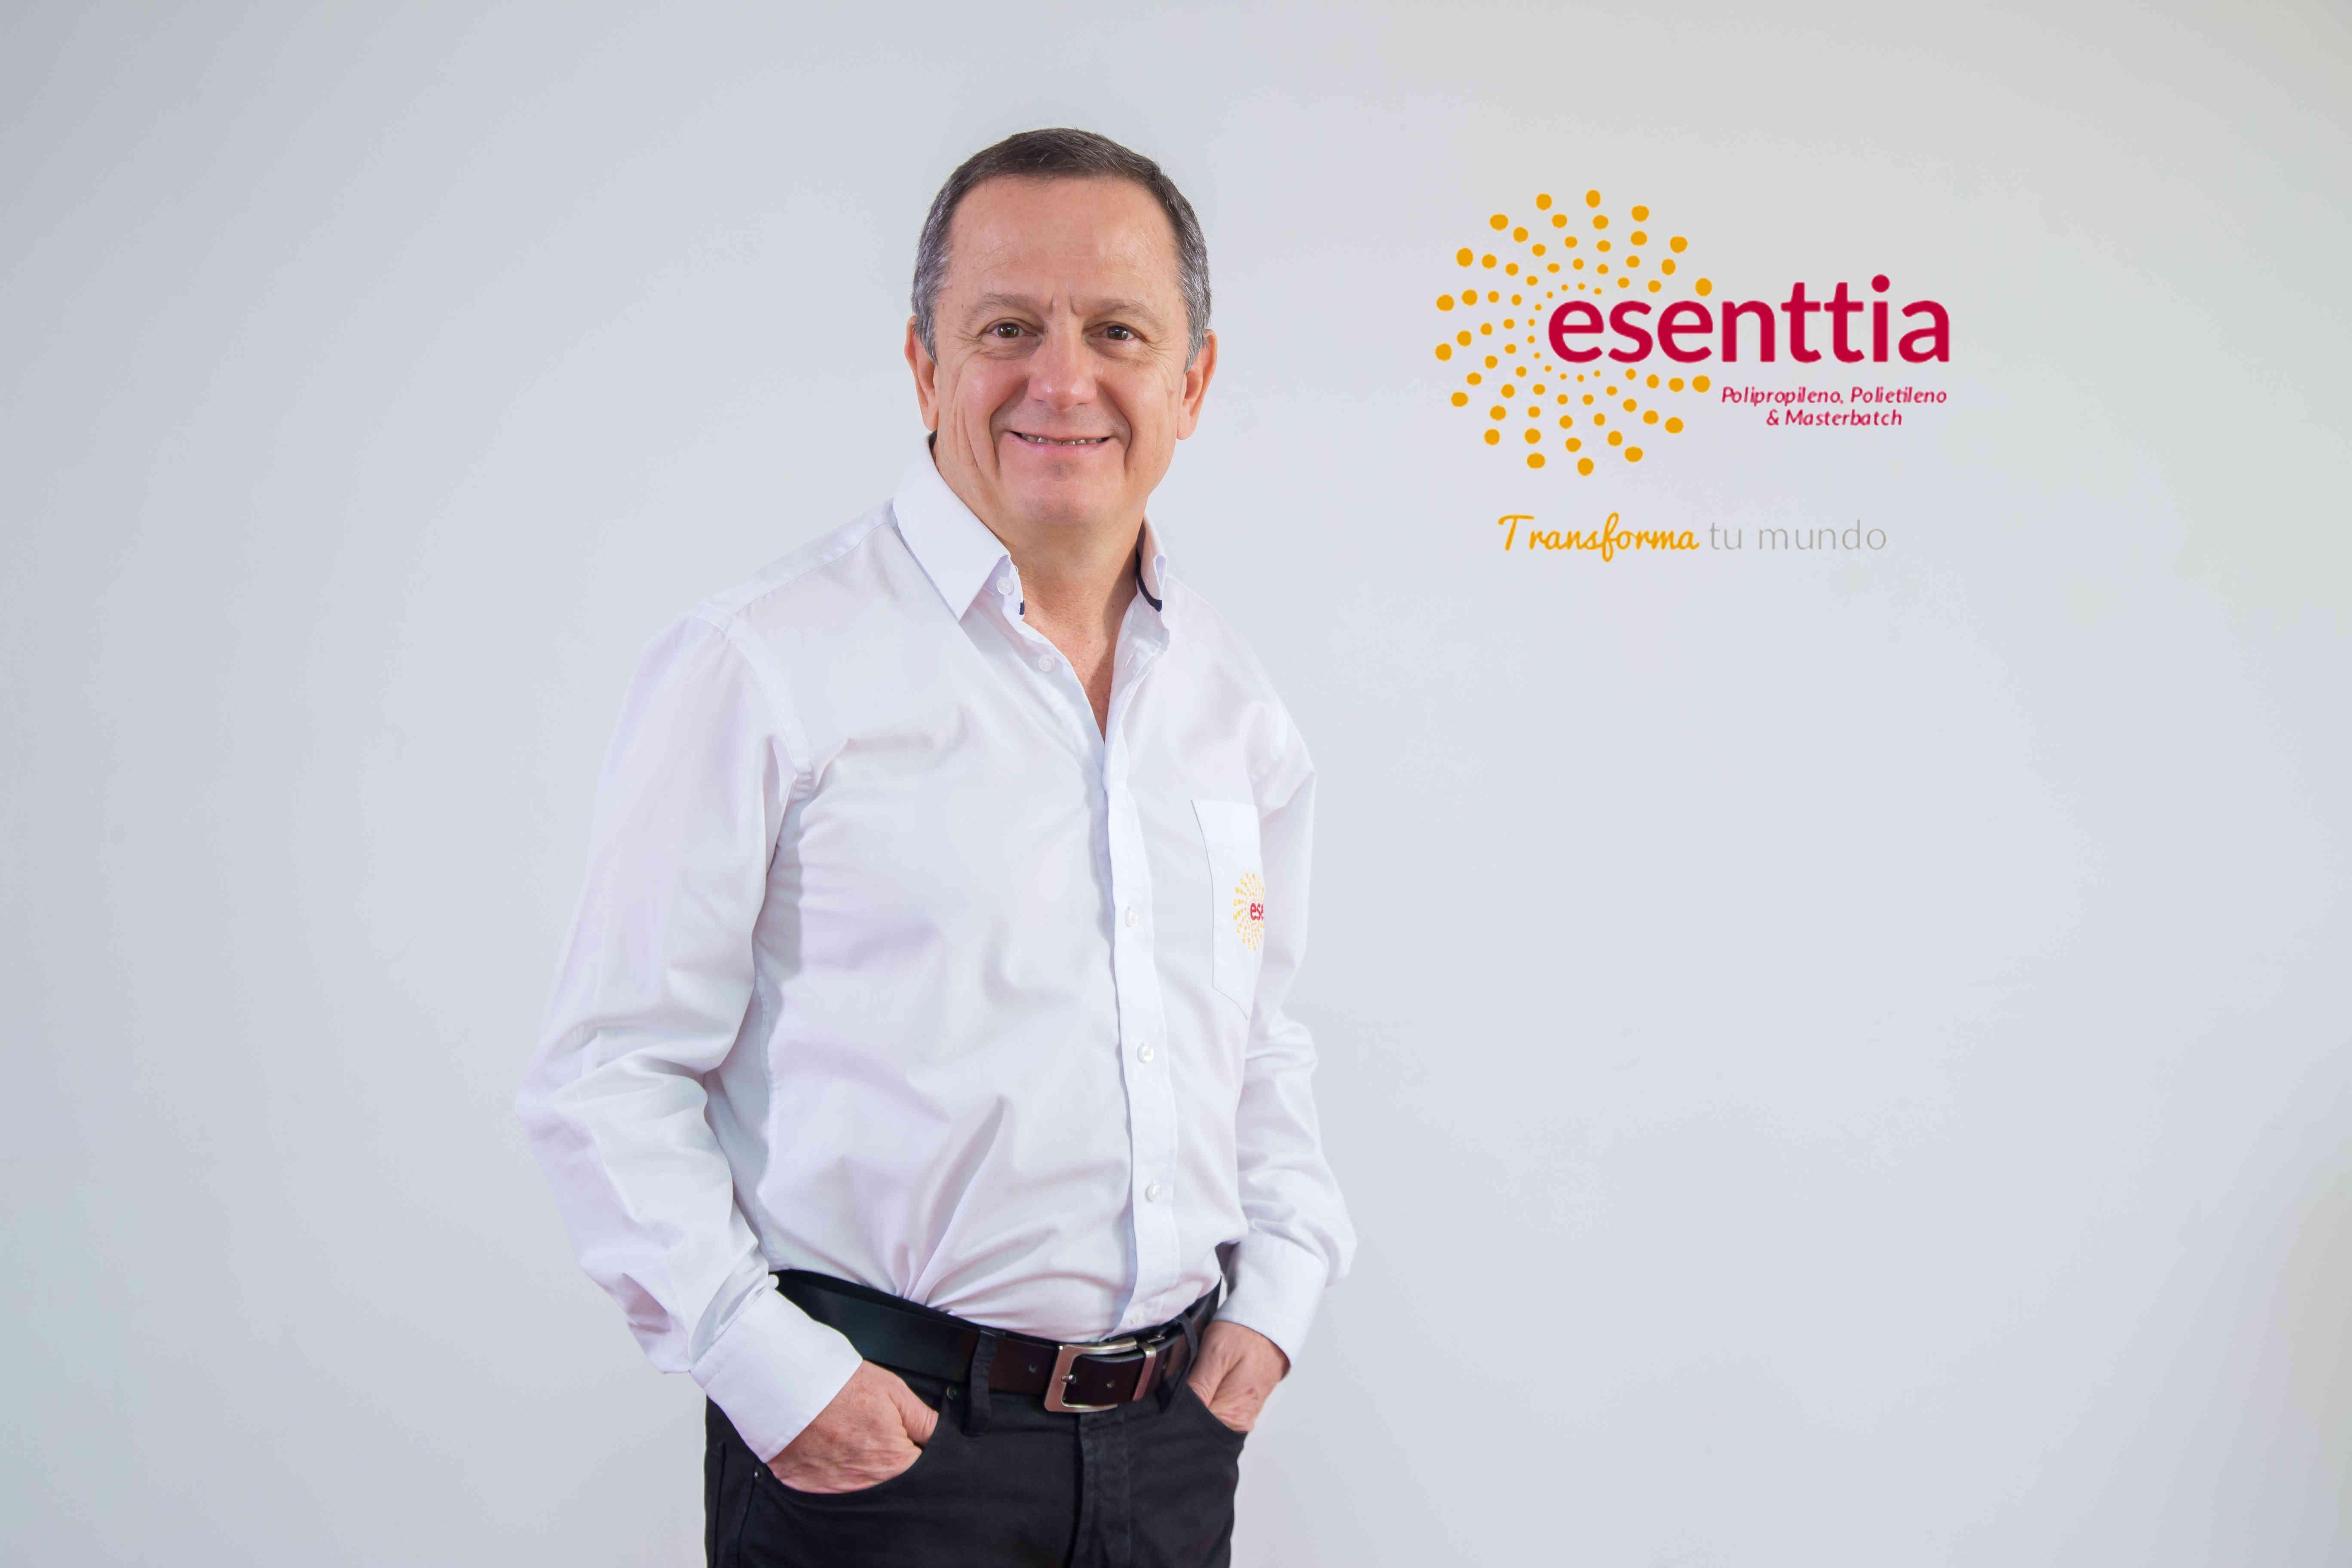 Juan Diego Mejia, Presidente de Esenttia